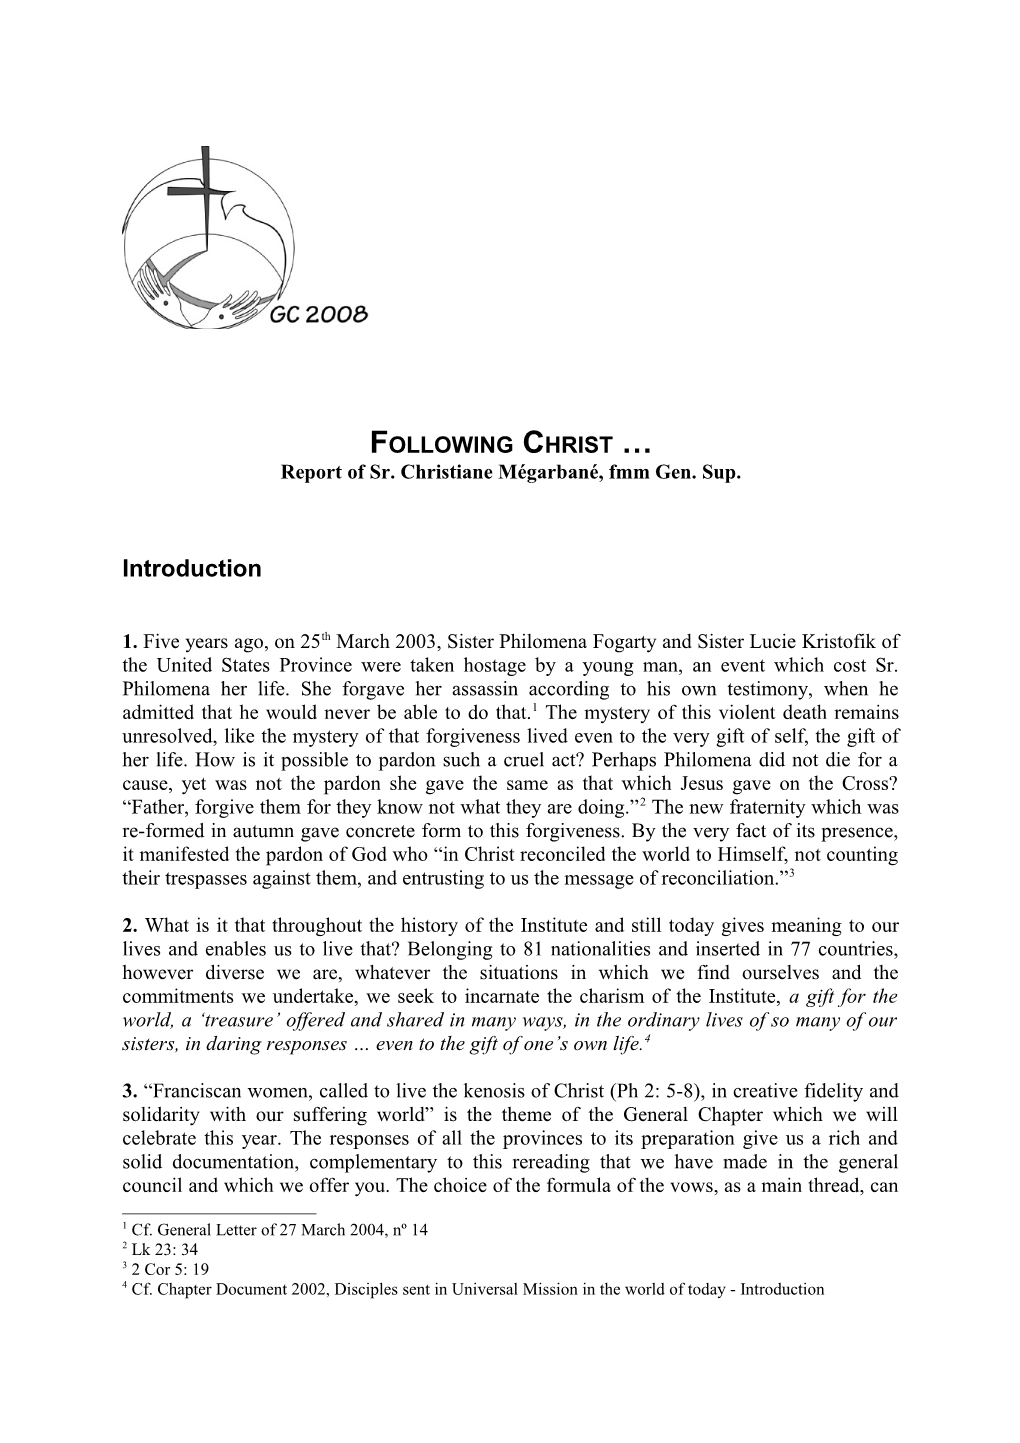 Report of Sr. Christiane Mégarbané, Fmm Gen. Sup